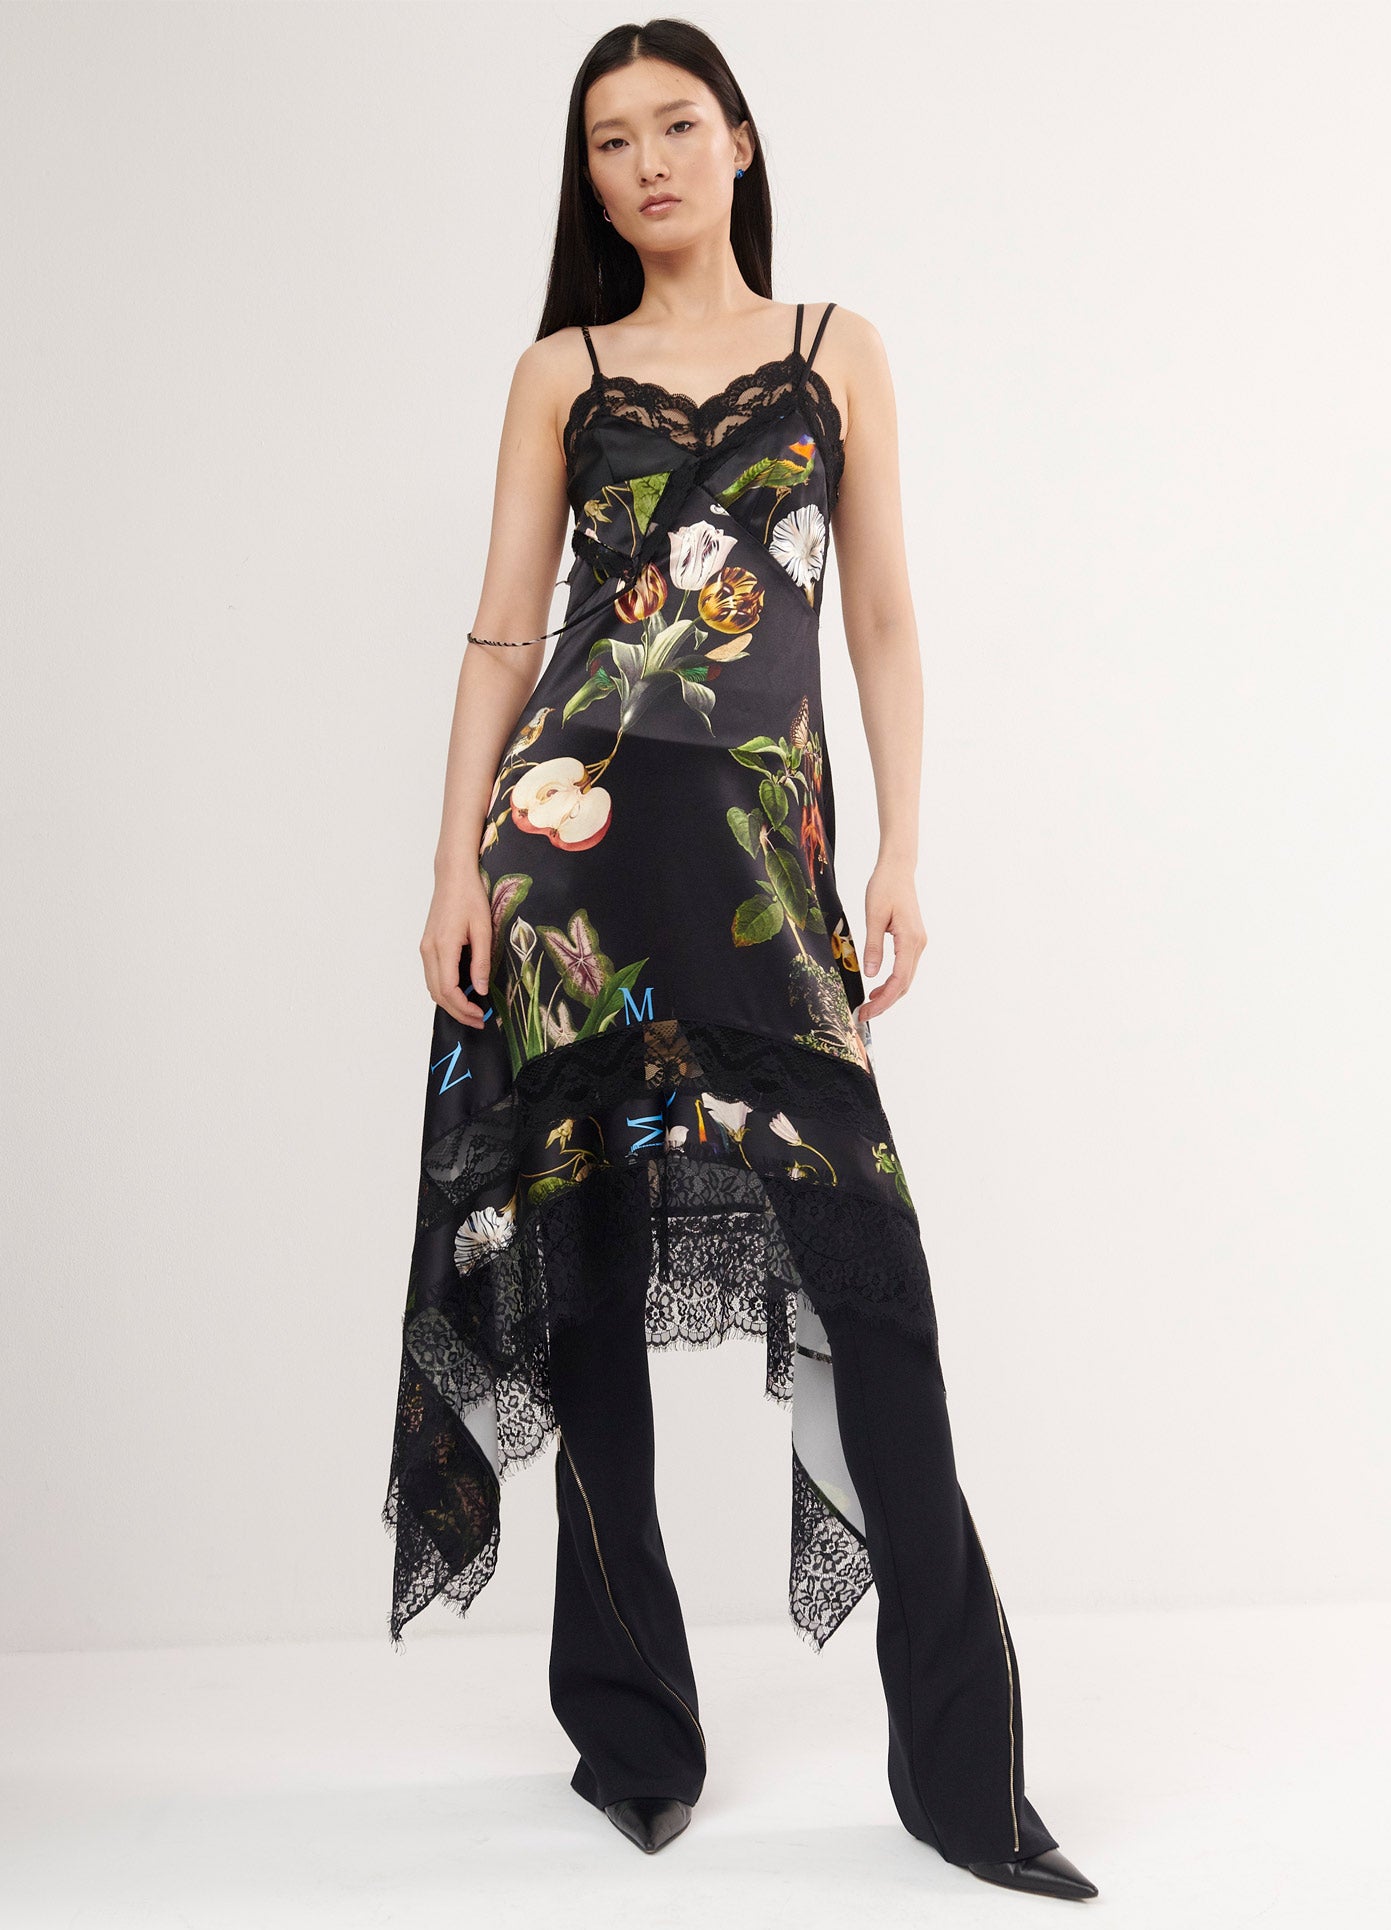 MONSE Print Lace Slip Dress in Black Multi on Model Full Front View